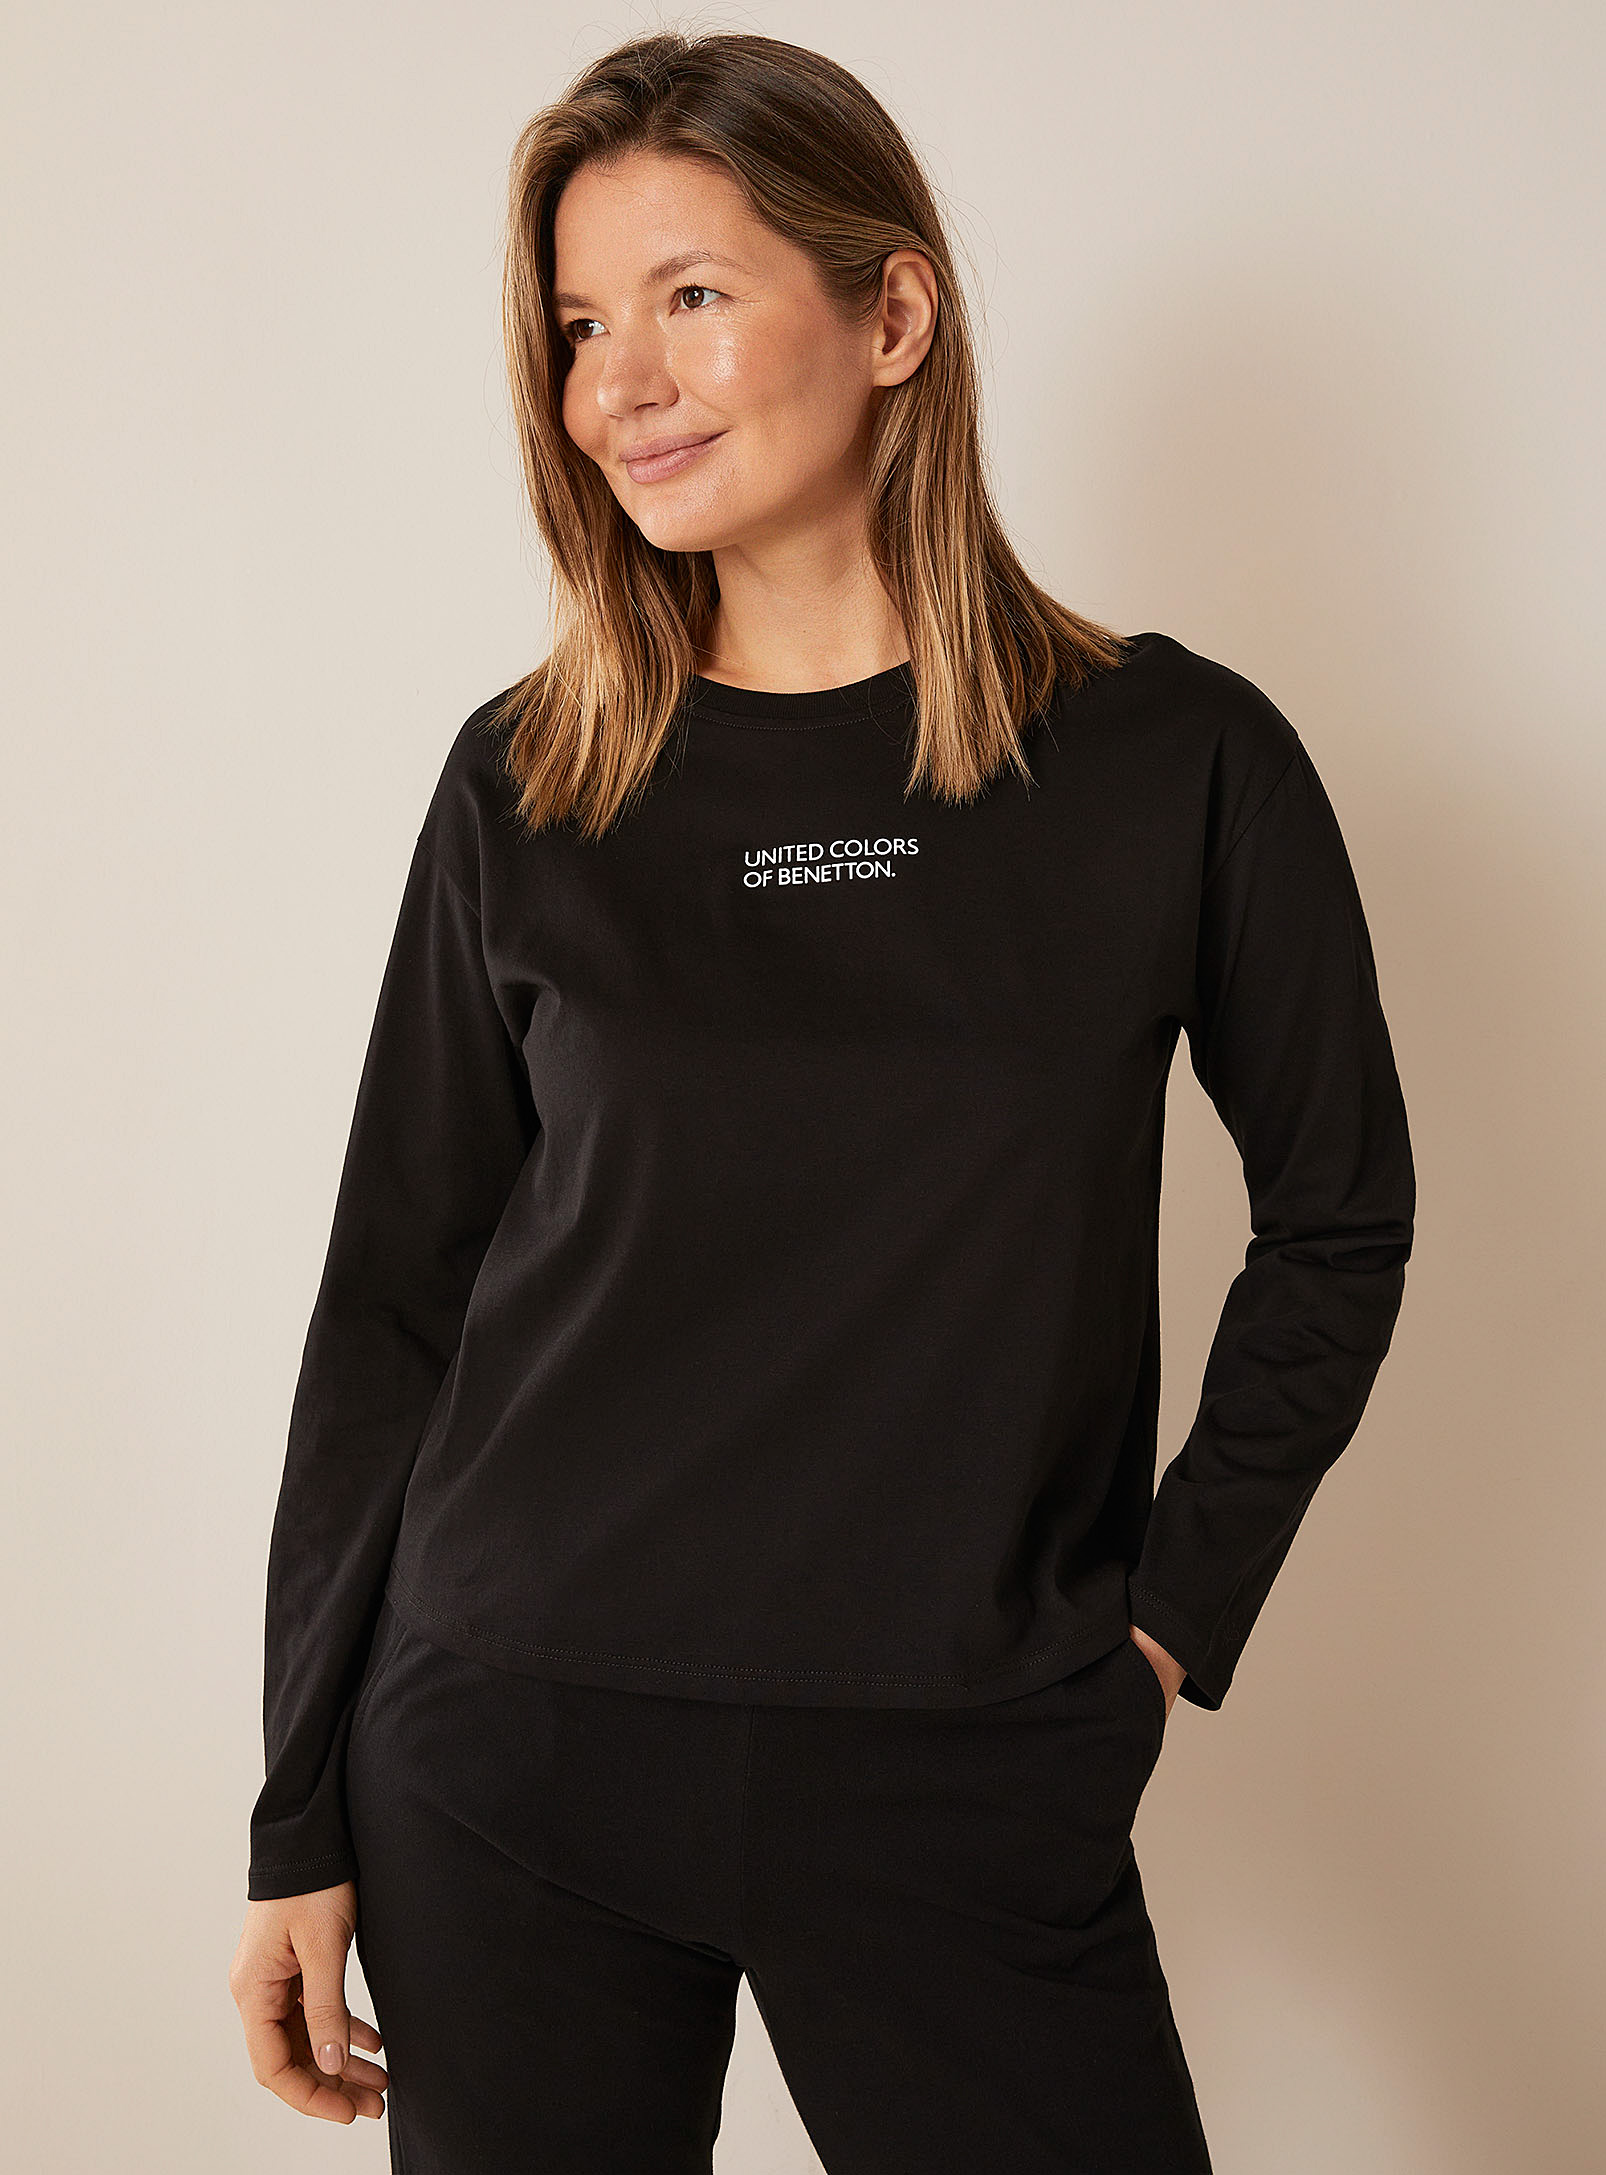 United Colors of Benetton - Women's Signature black lounge T-shirt